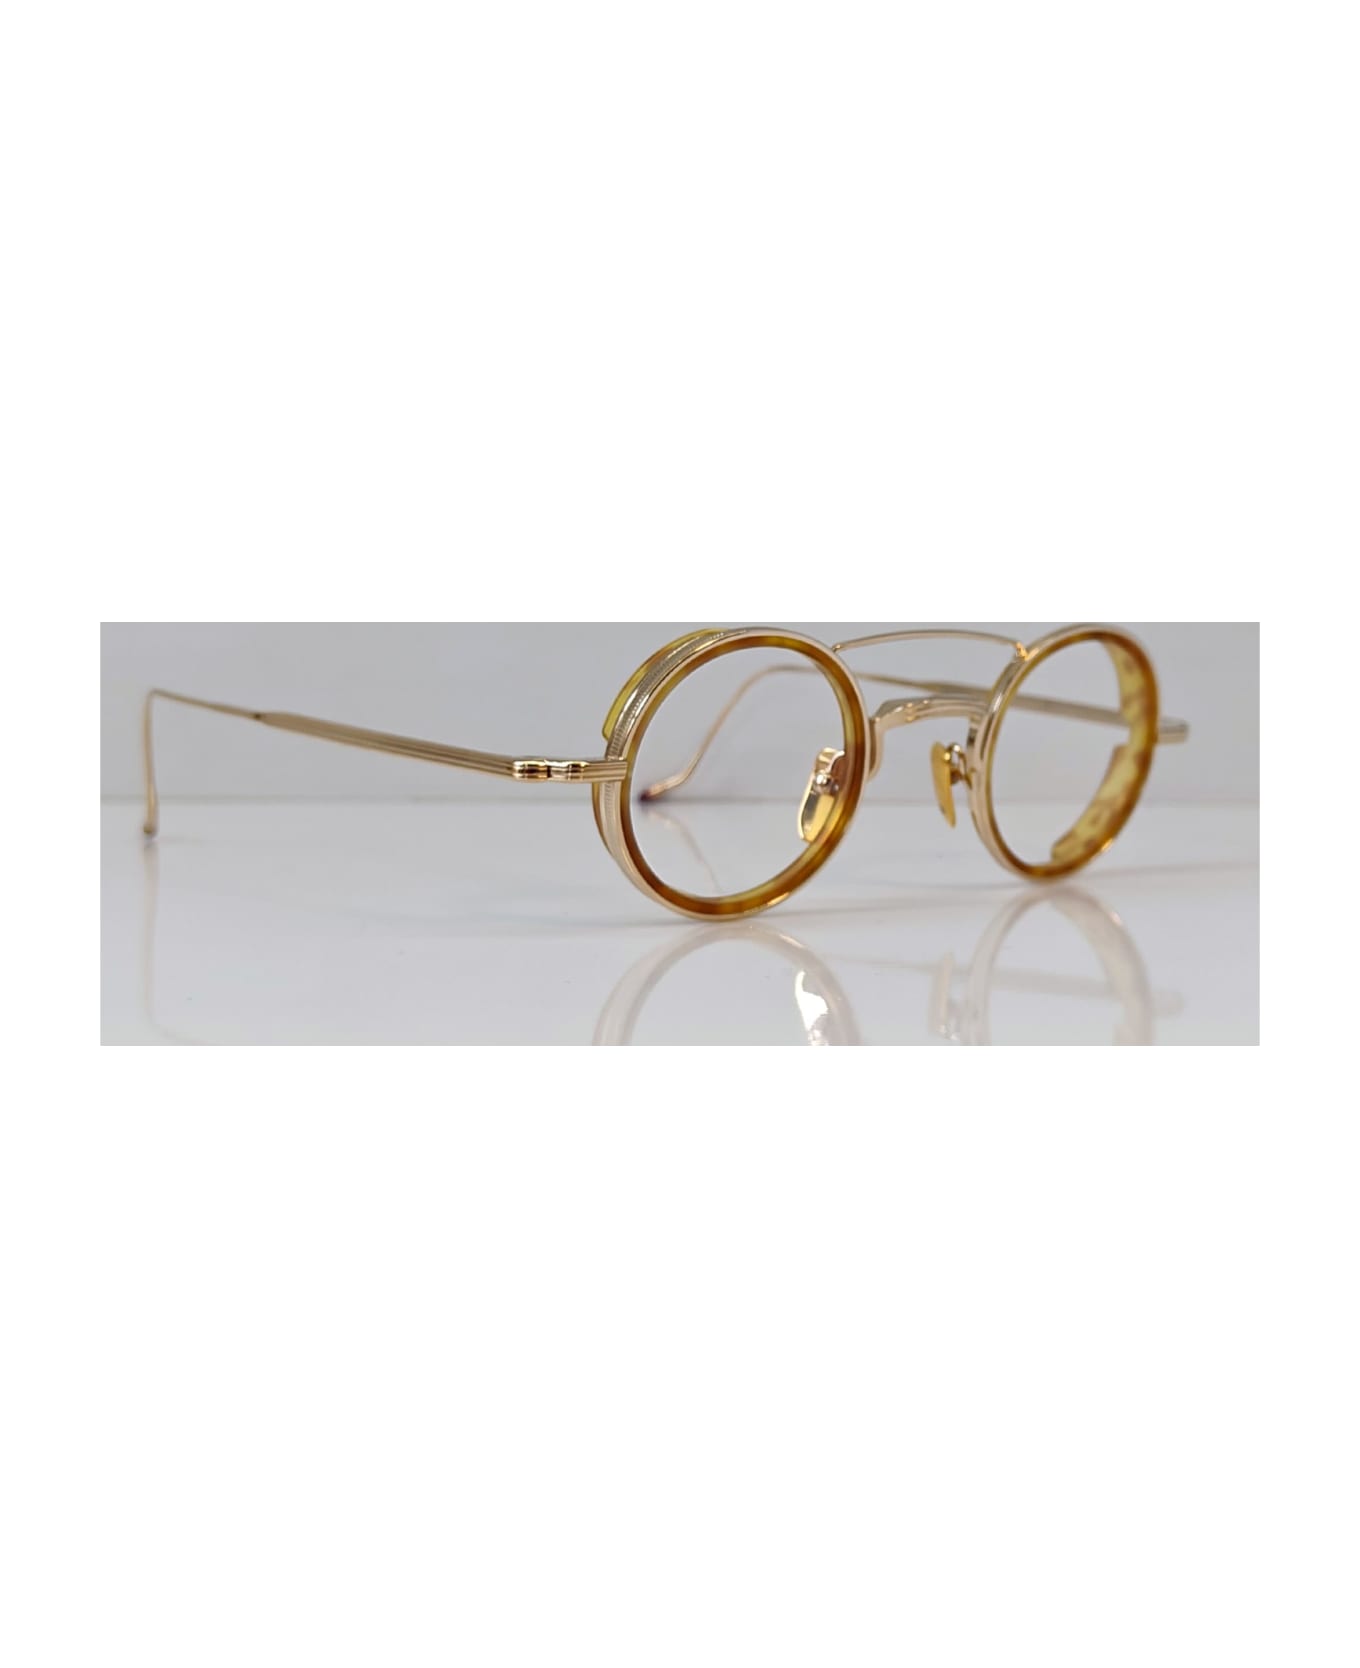 Jacques Marie Mage Ringo 2 - Bichon Rx Glasses - light gold